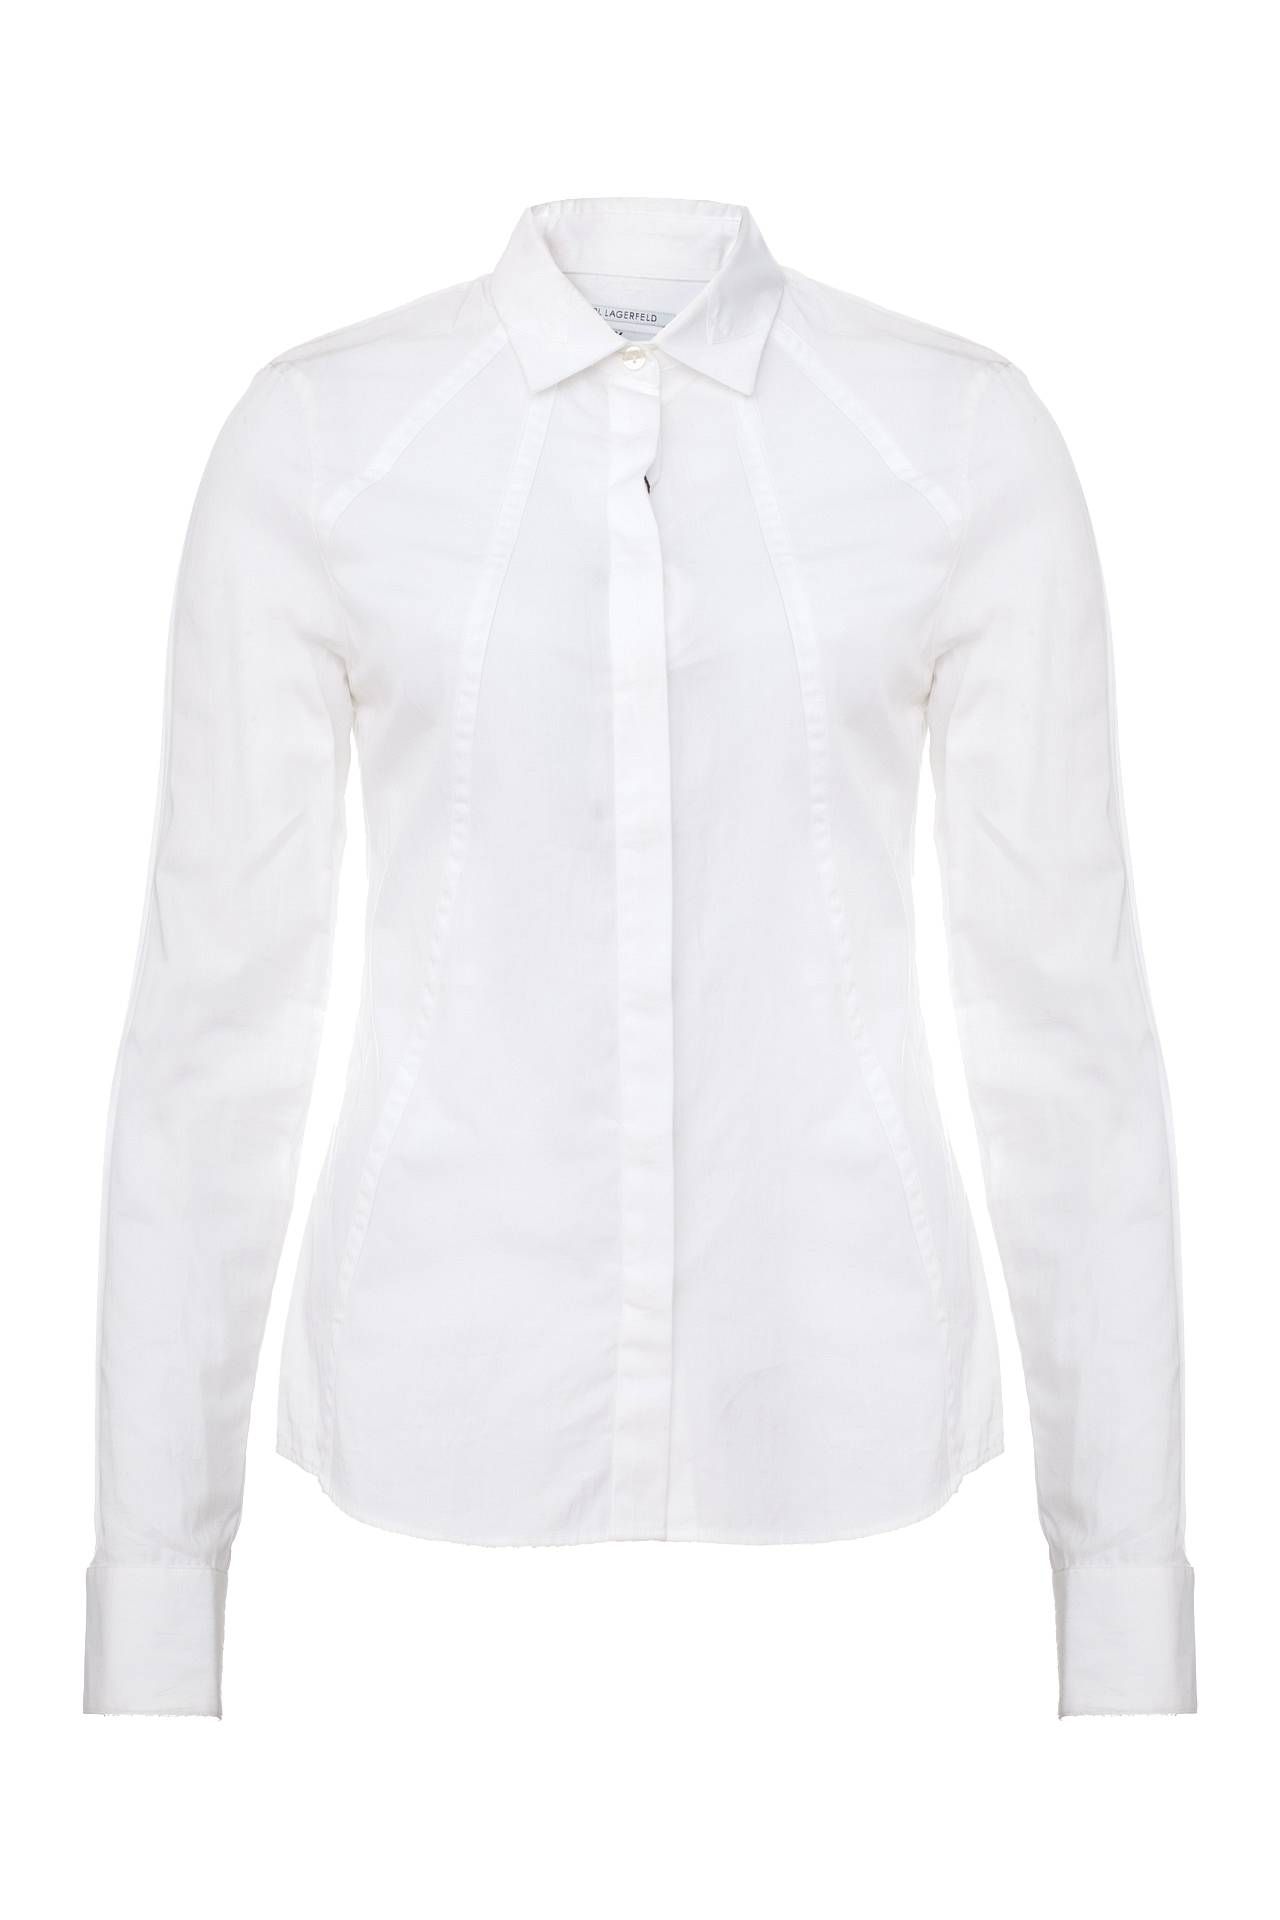 Одежда женская Рубашка KARL LAGERFELD (KW80124815/29). Купить за 8750 руб.